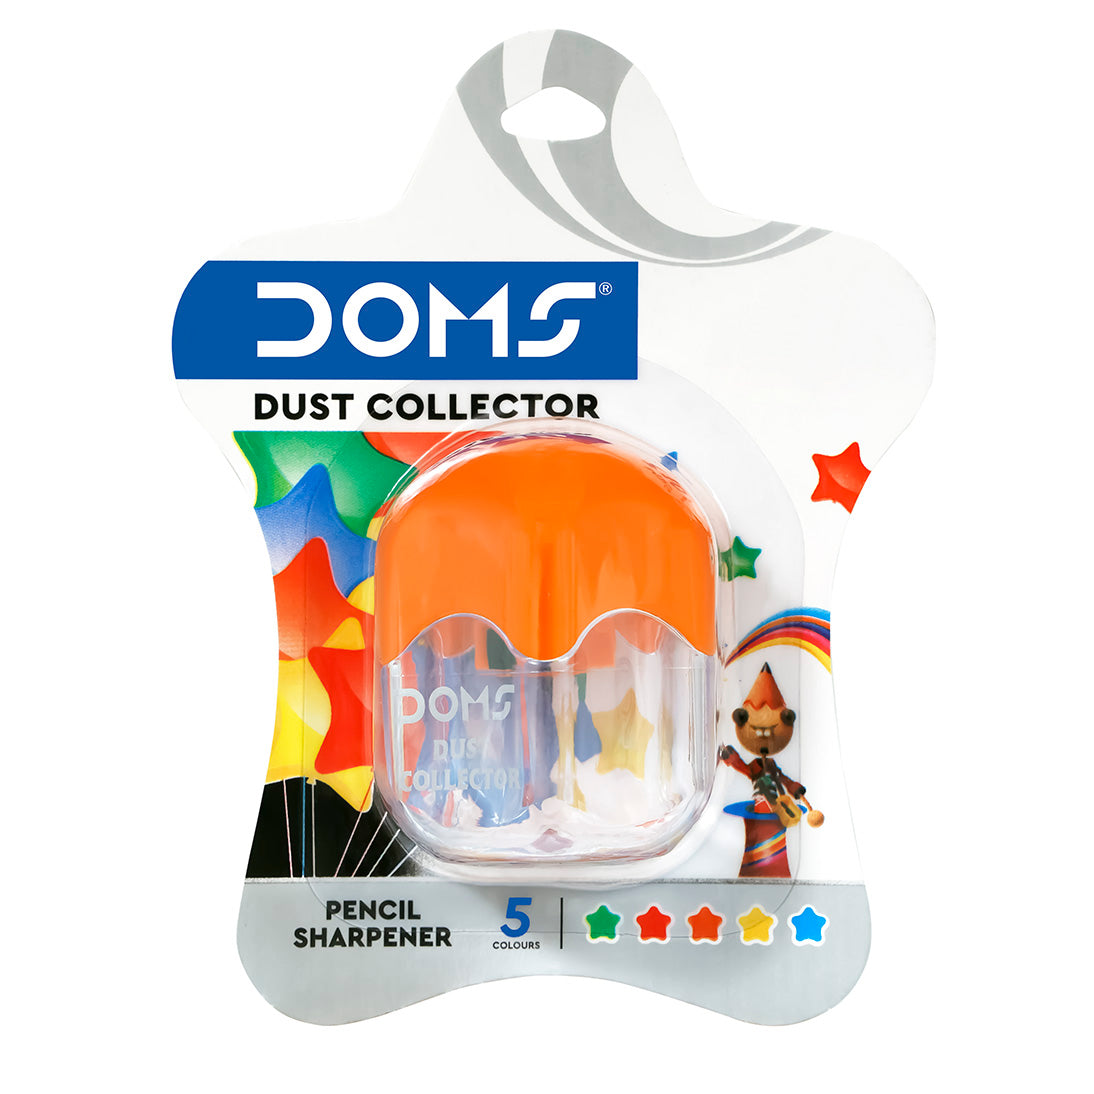 DOMS Dust Collector Pencil Sharpener Blister Pack 1 Pcs